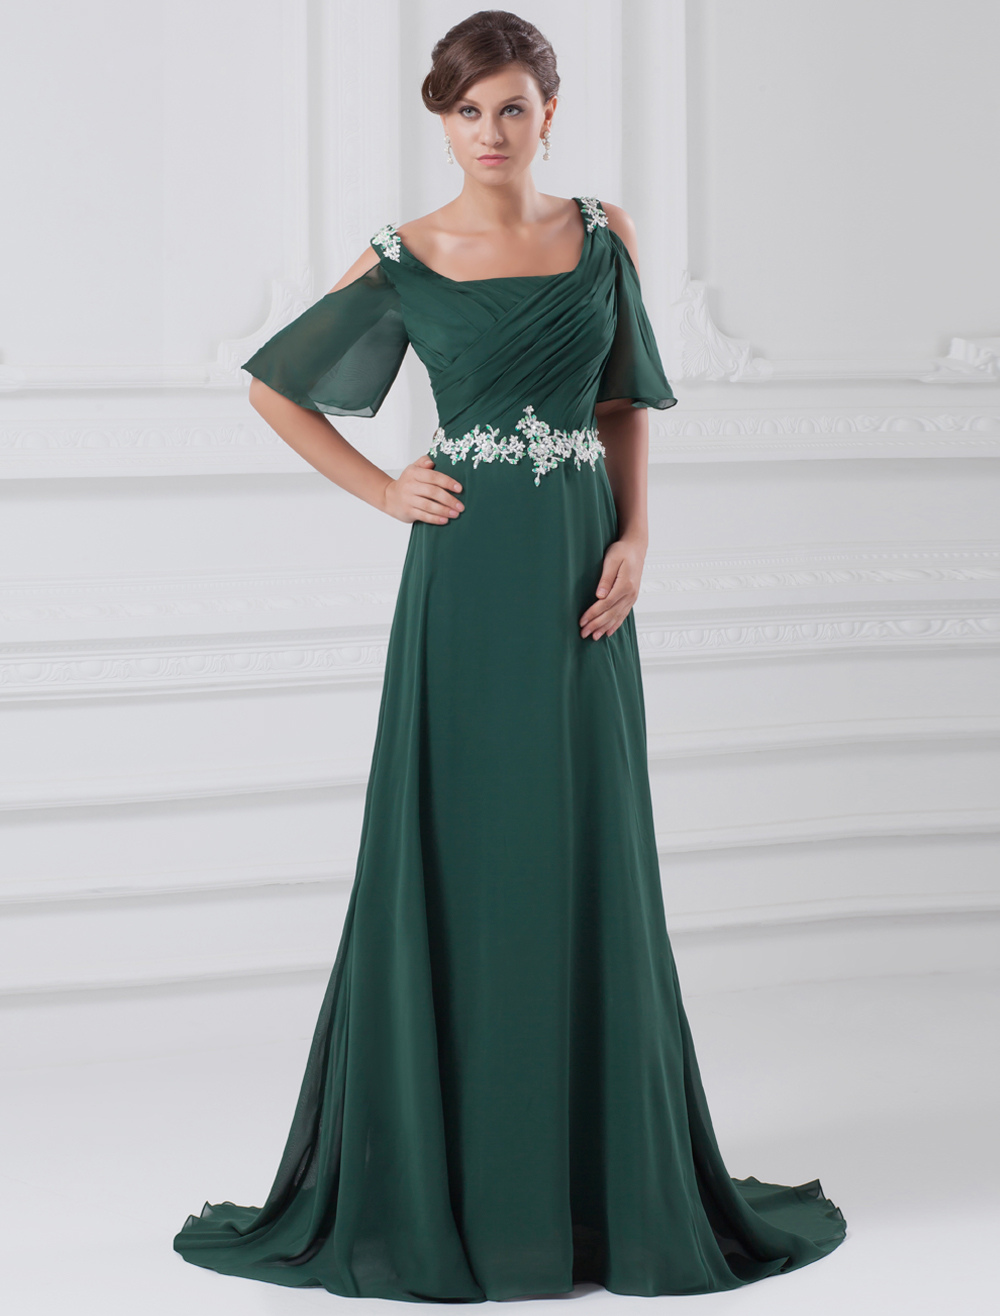 Dark Green Chiffon Evening Dress with Off-The-Shoulder Neck (Wedding Evening Dresses) photo